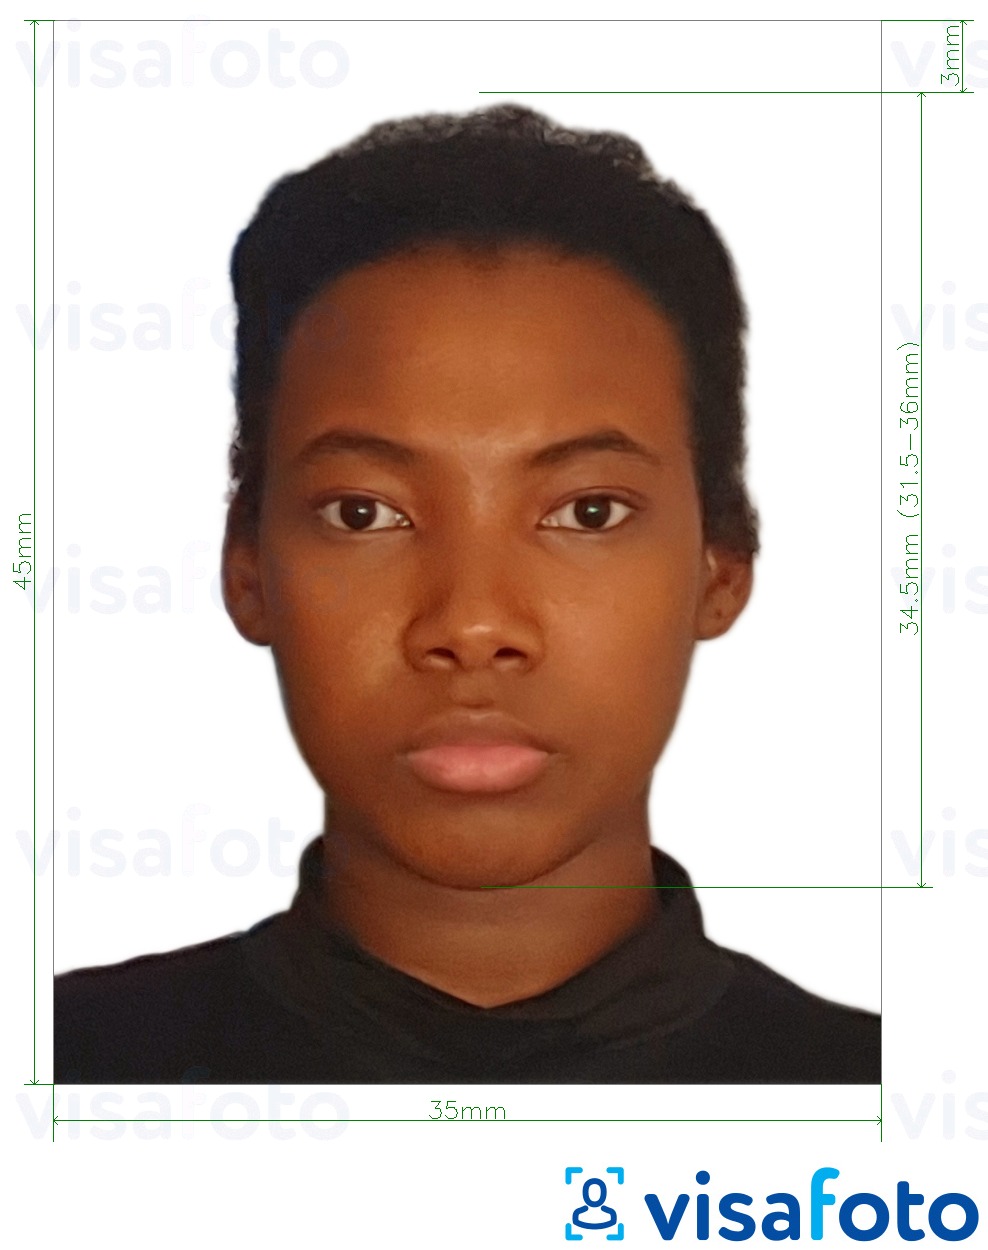 Contoh foto untuk Pasport Burkina Faso 4.5x3.5 cm (45x35 mm) dengan spesifikasi saiz yang tepat.